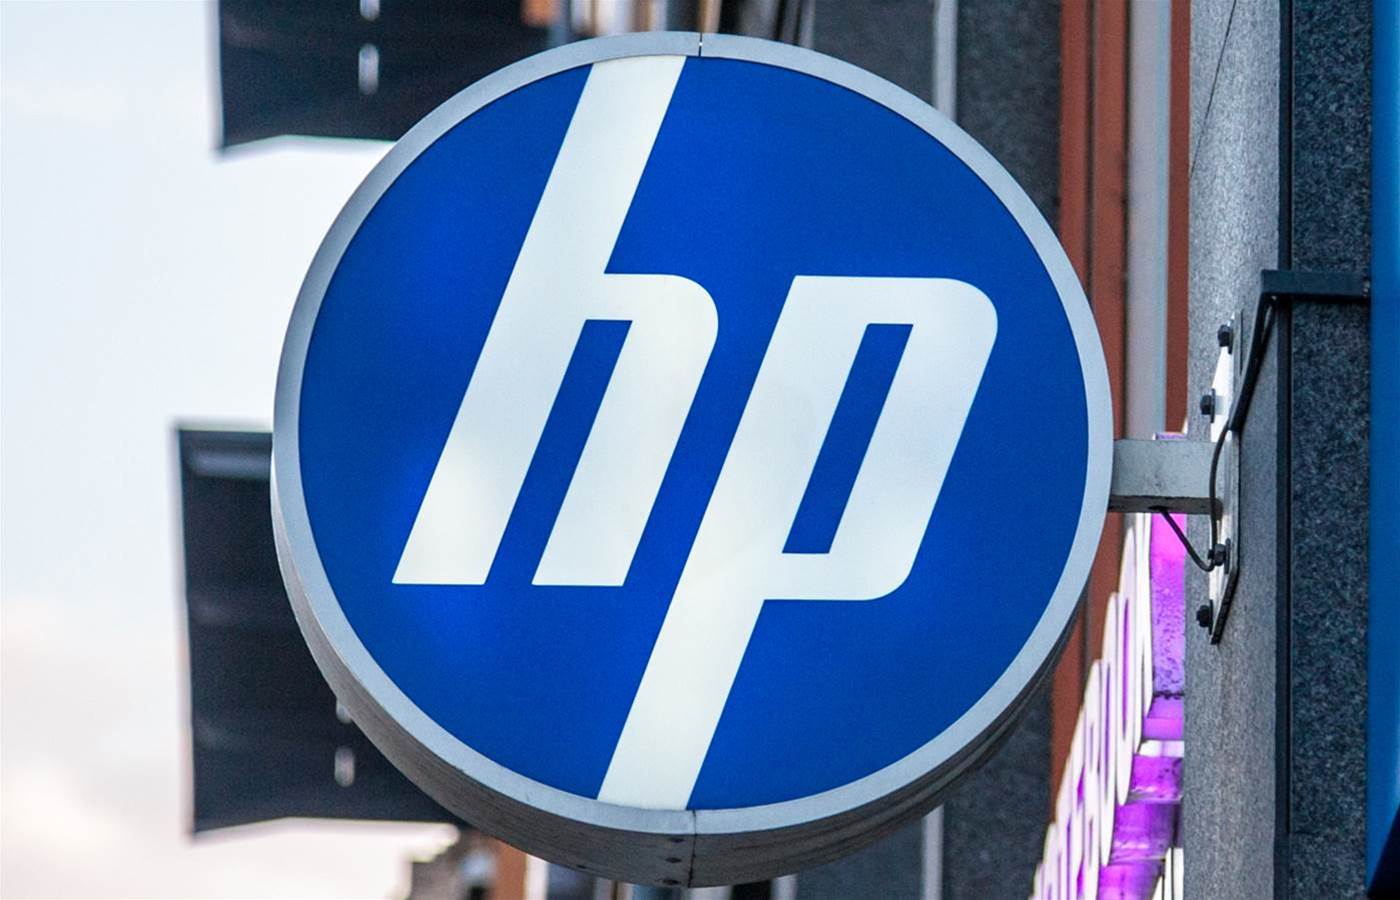 British tech founder Mike Lynch denies defrauding HP